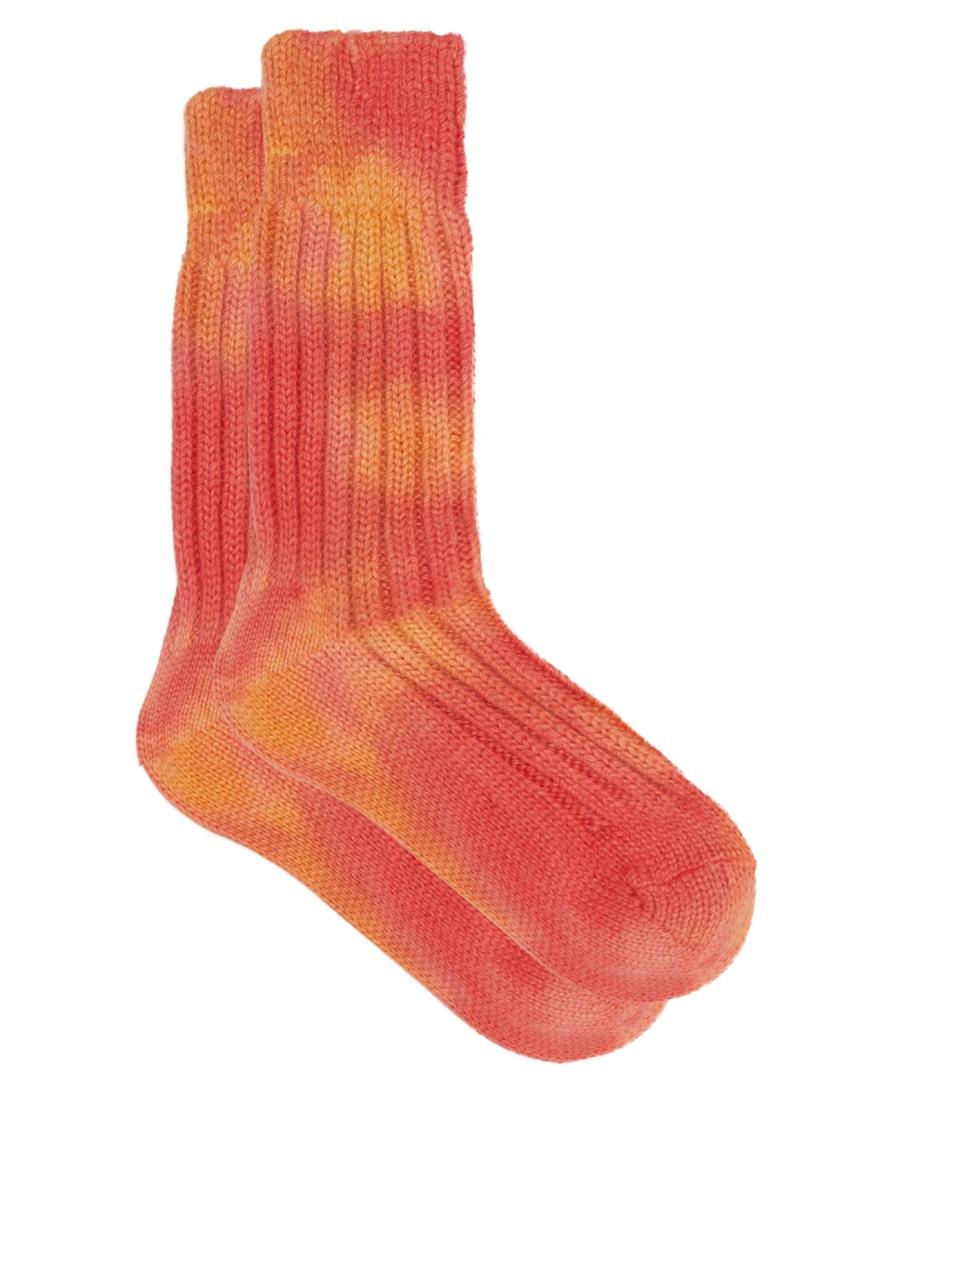 28 Unisex Valentine's Day Gifts: The Elder Statesman Yosemite tie-dye cashmere Socks